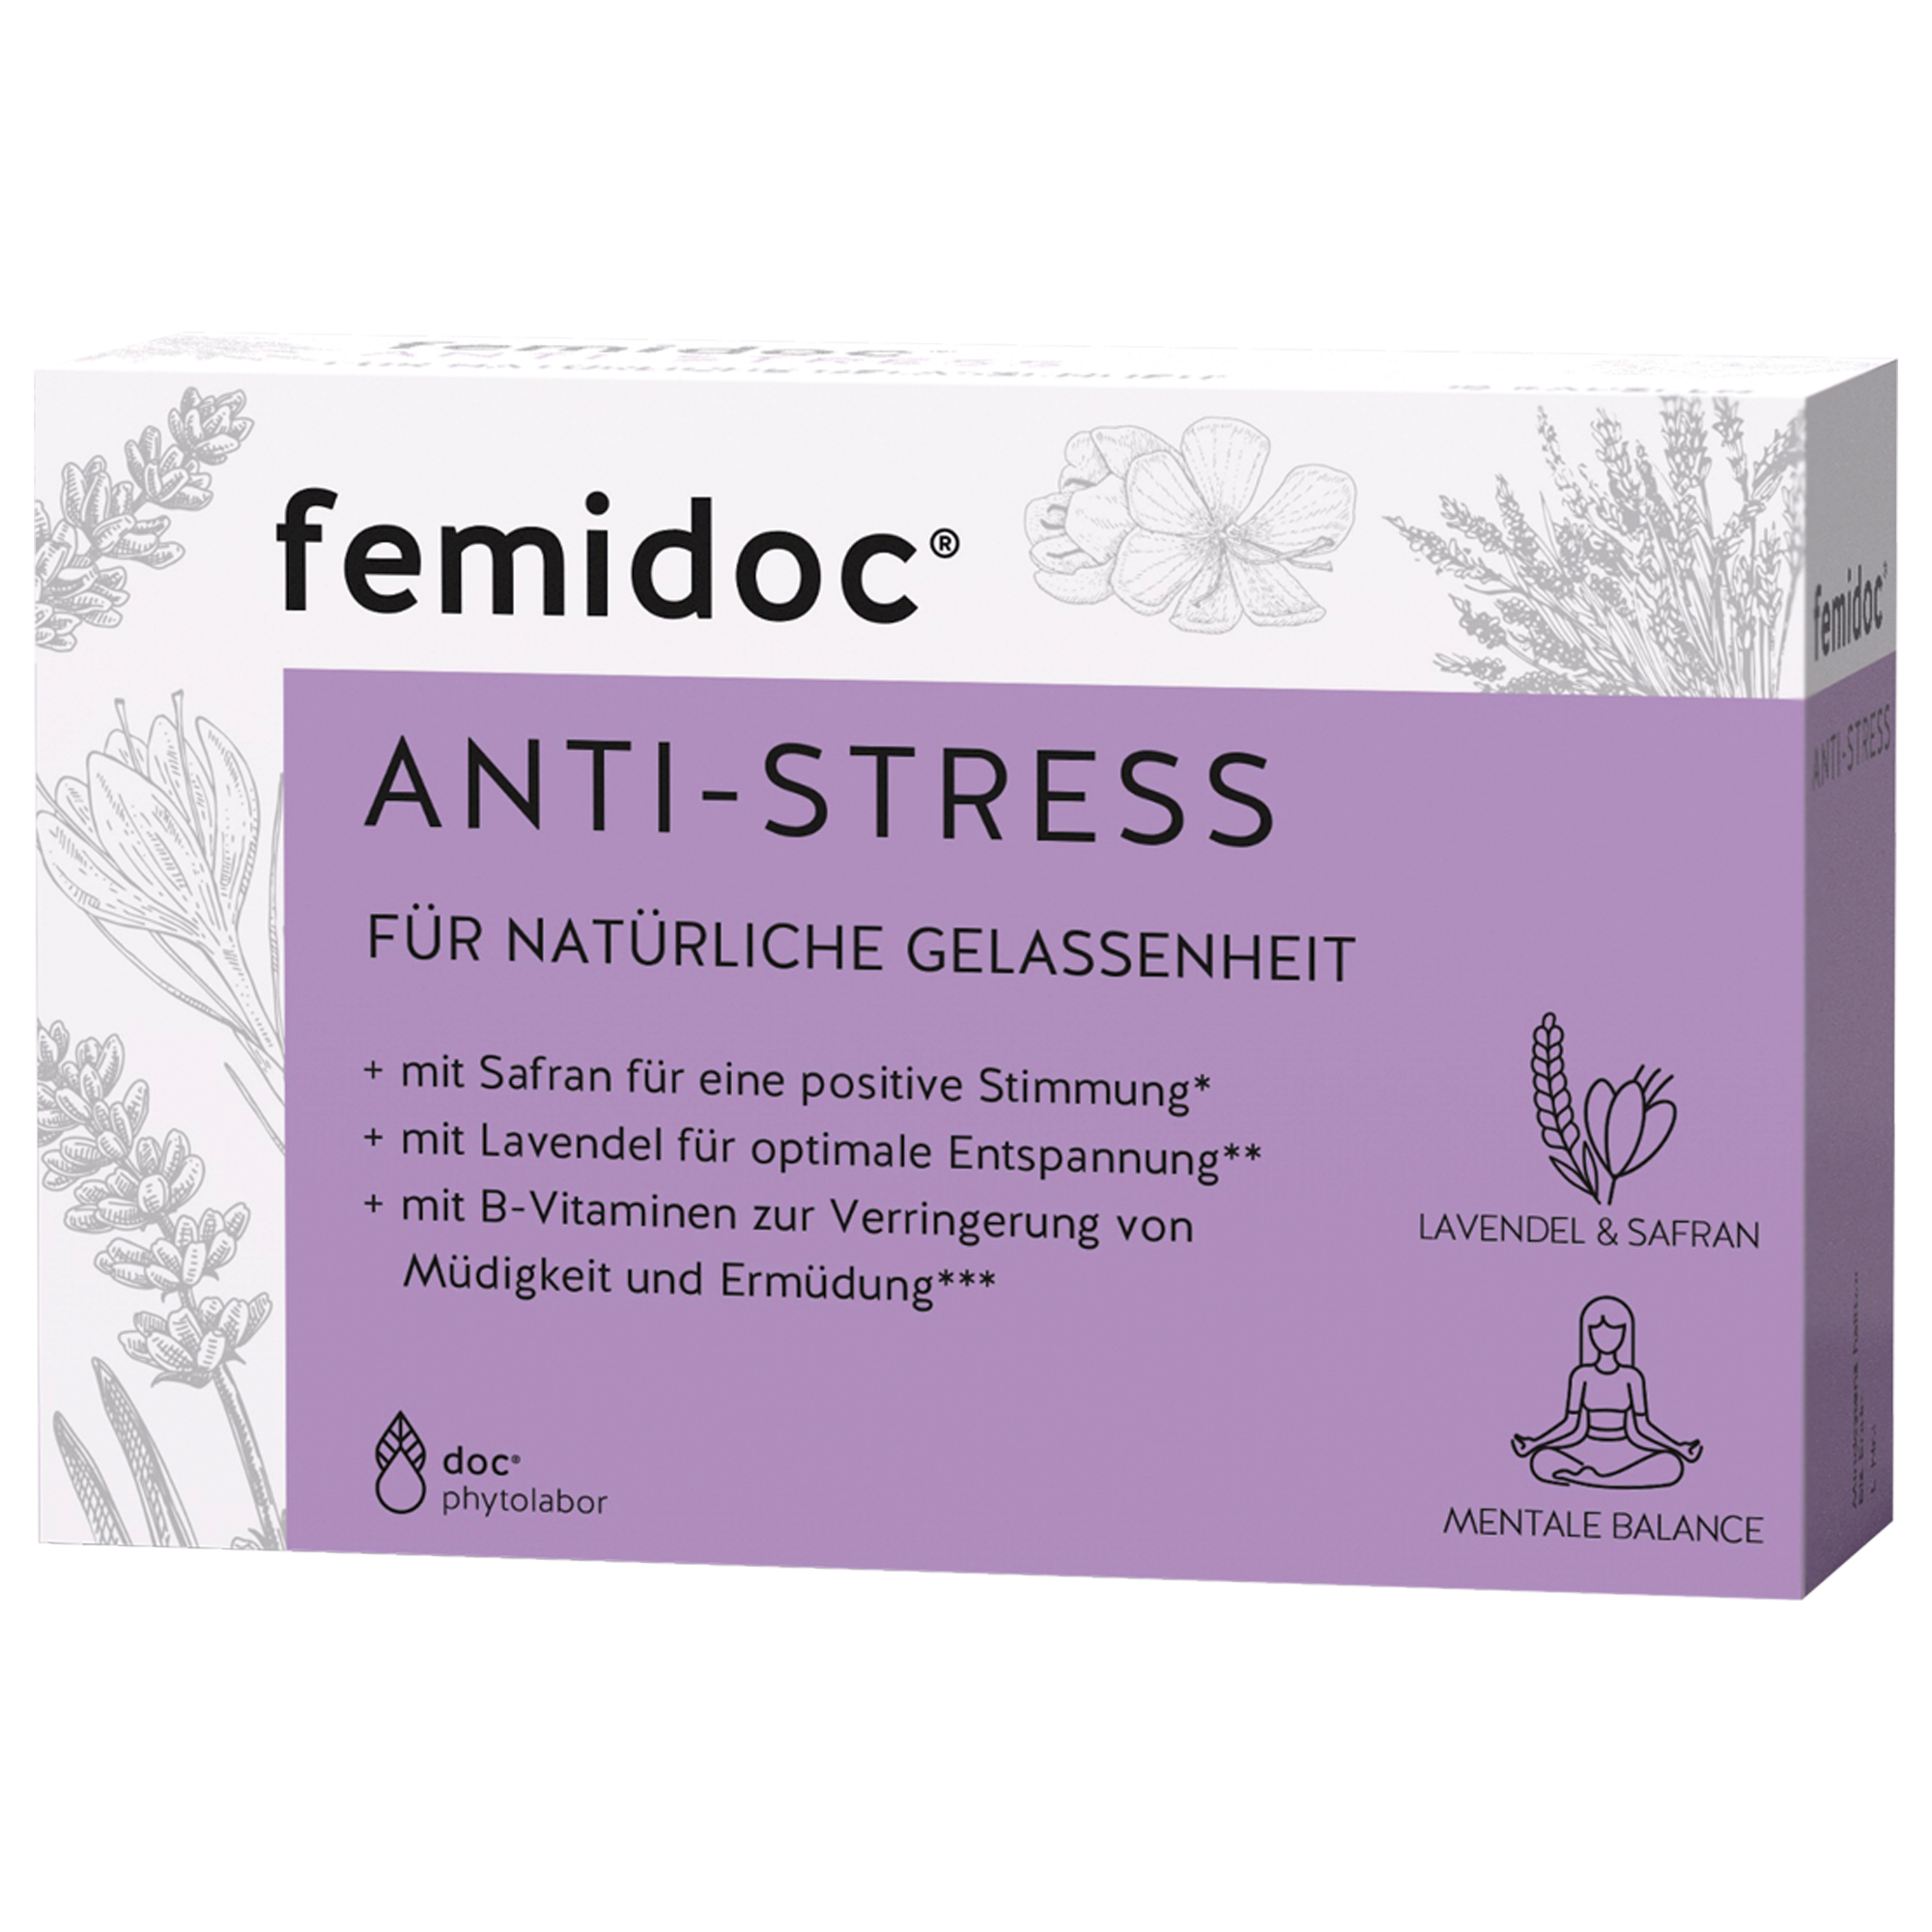 femidoc® ANTI-STRESS